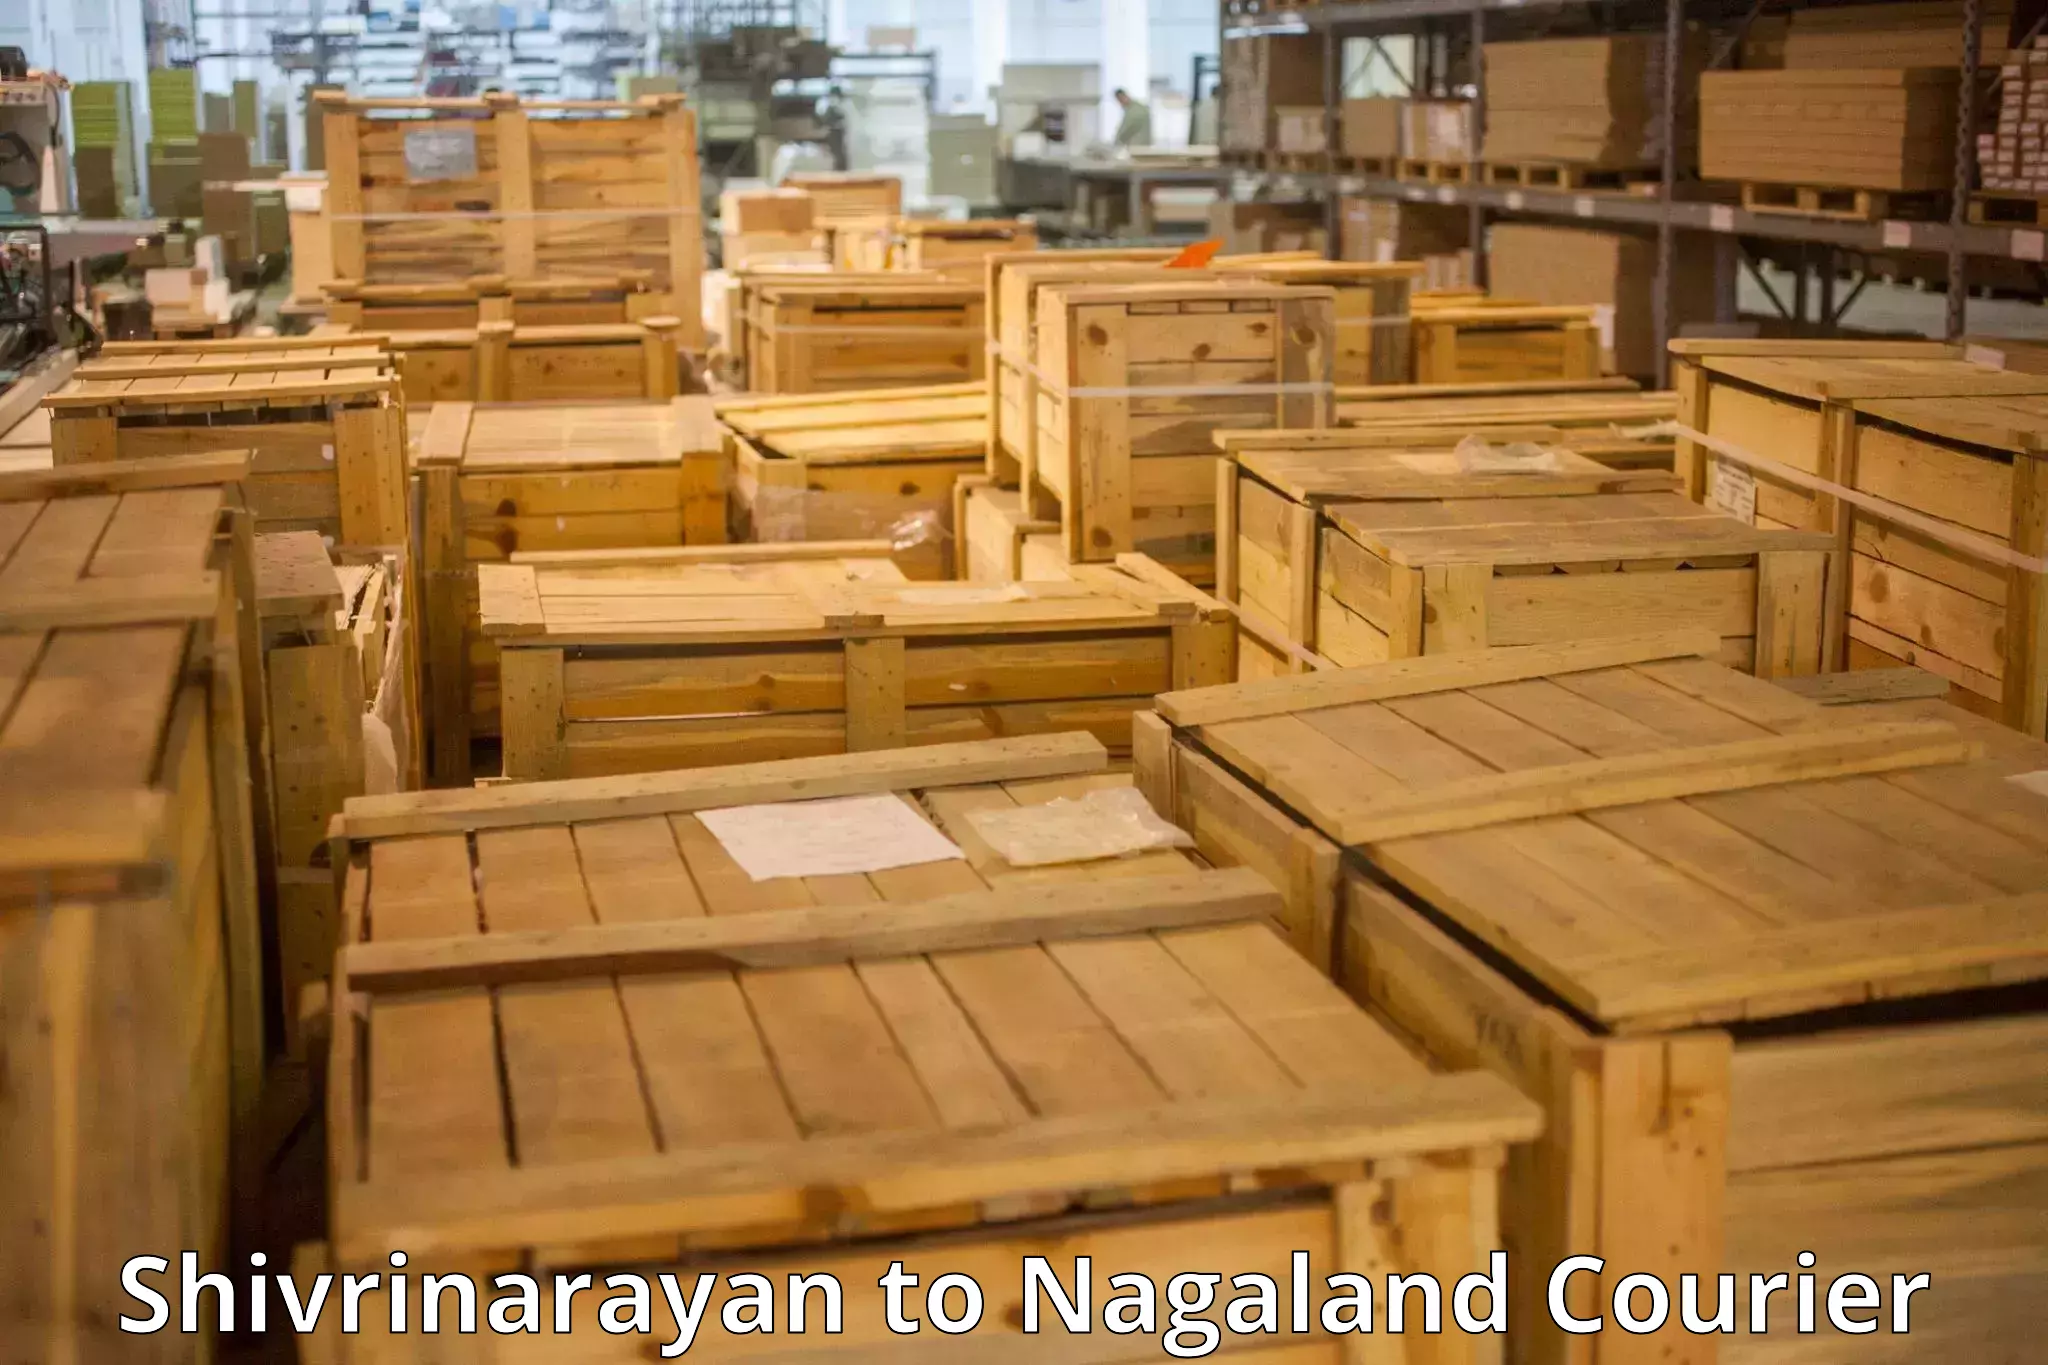 Luggage transport consultancy Shivrinarayan to Nagaland